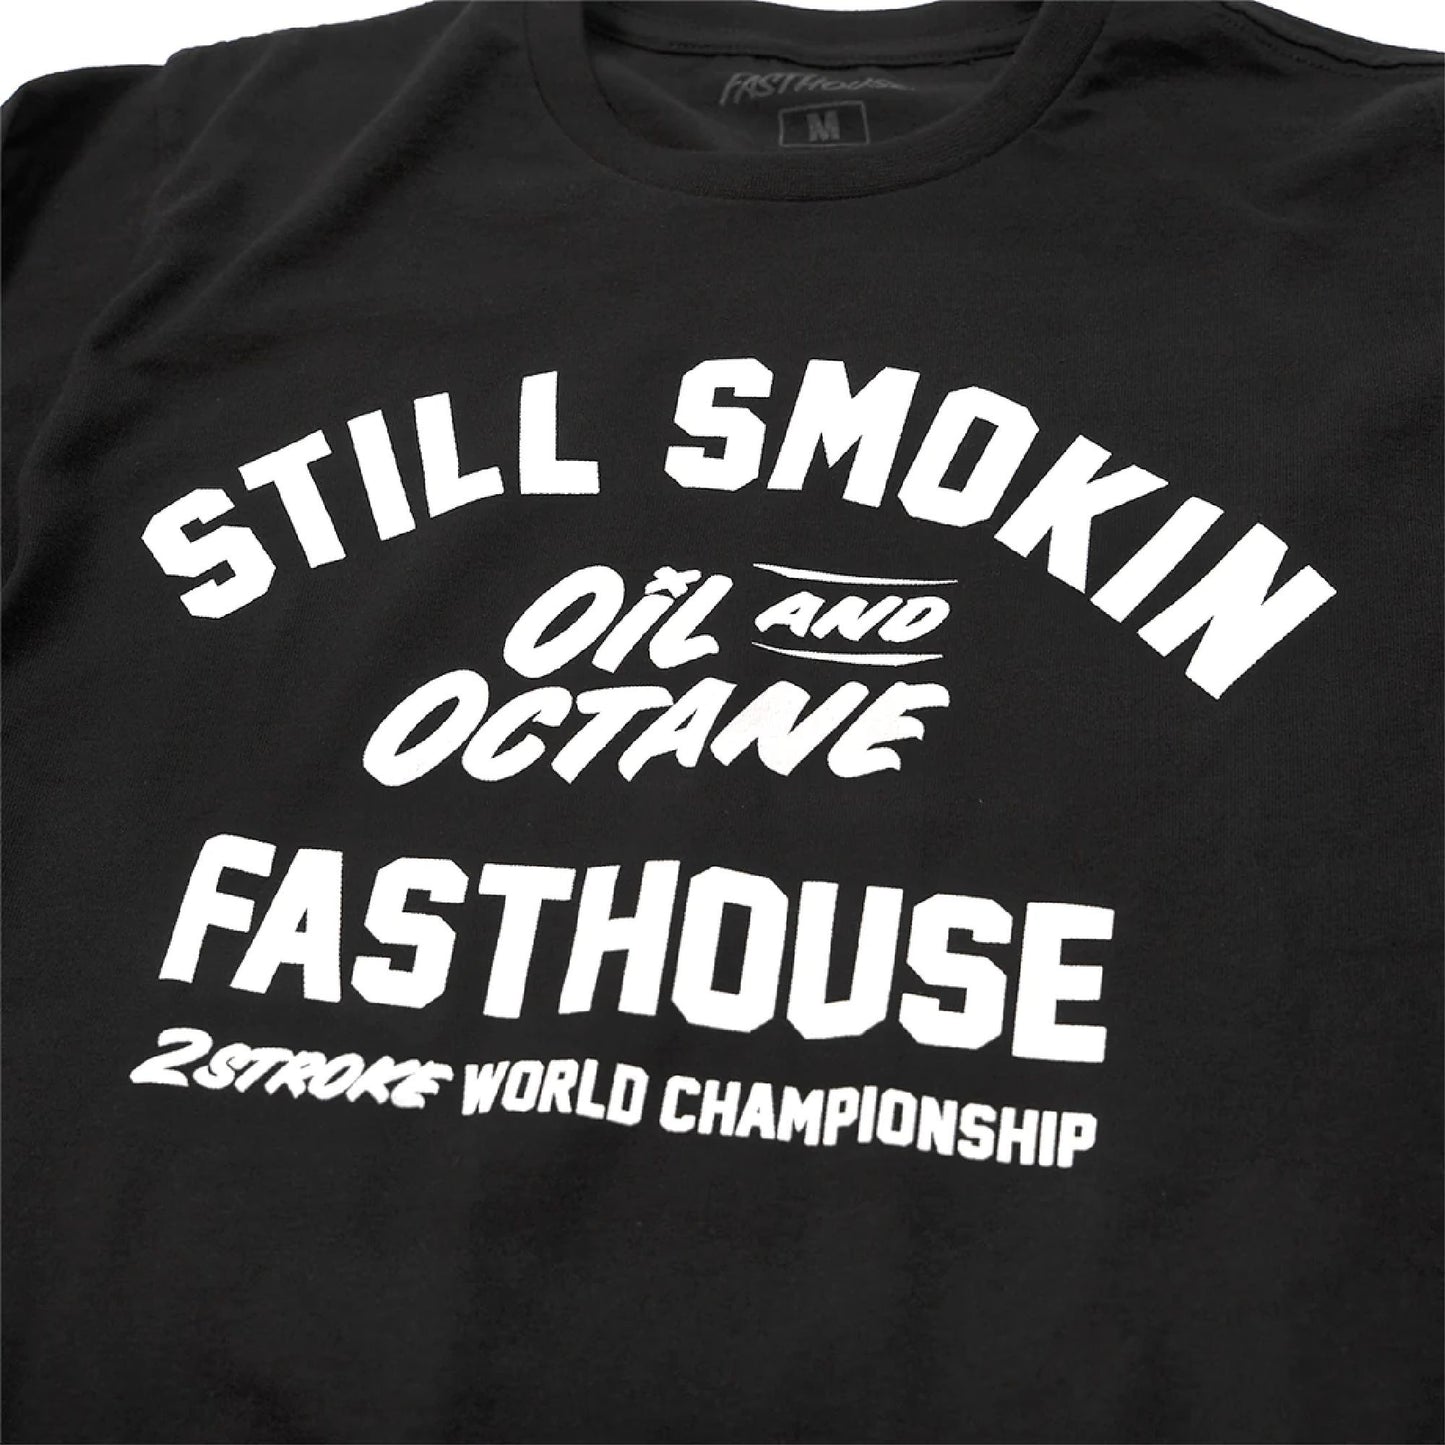 Fasthouse Still Smokin LS Tee Black LS Shirts